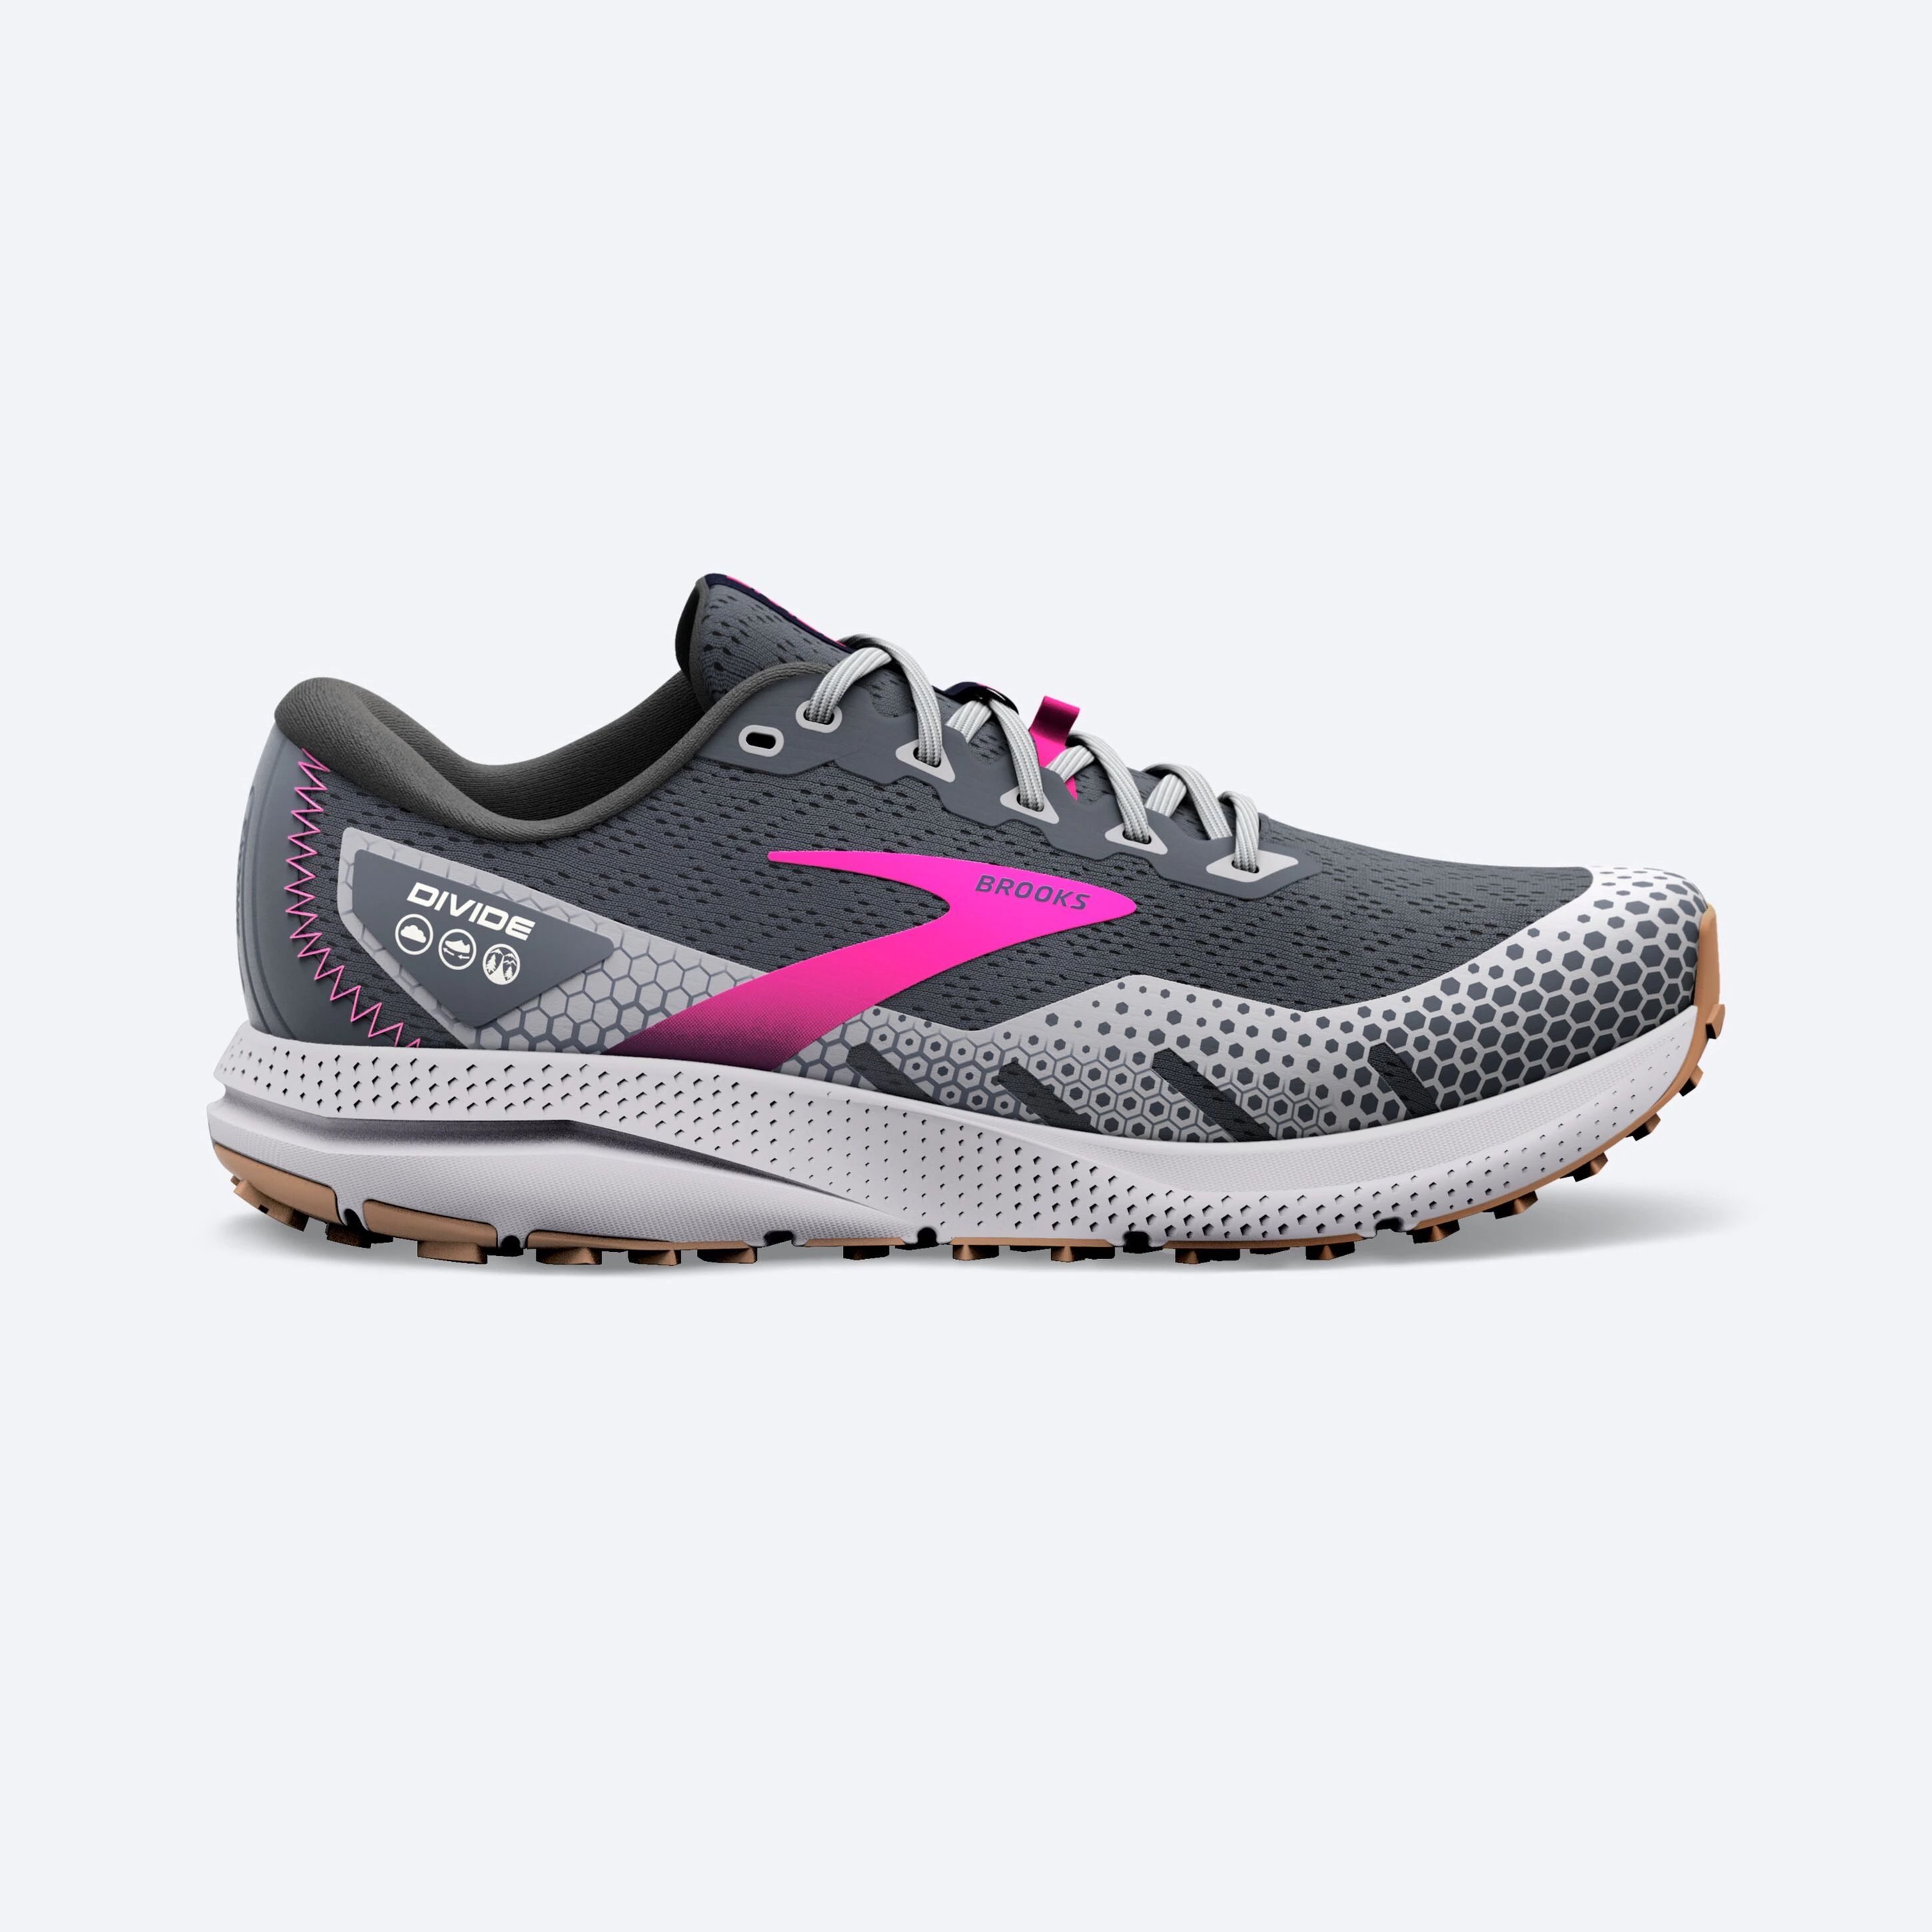 Chaussure de running Divide 3 - Ebony Grey Pink